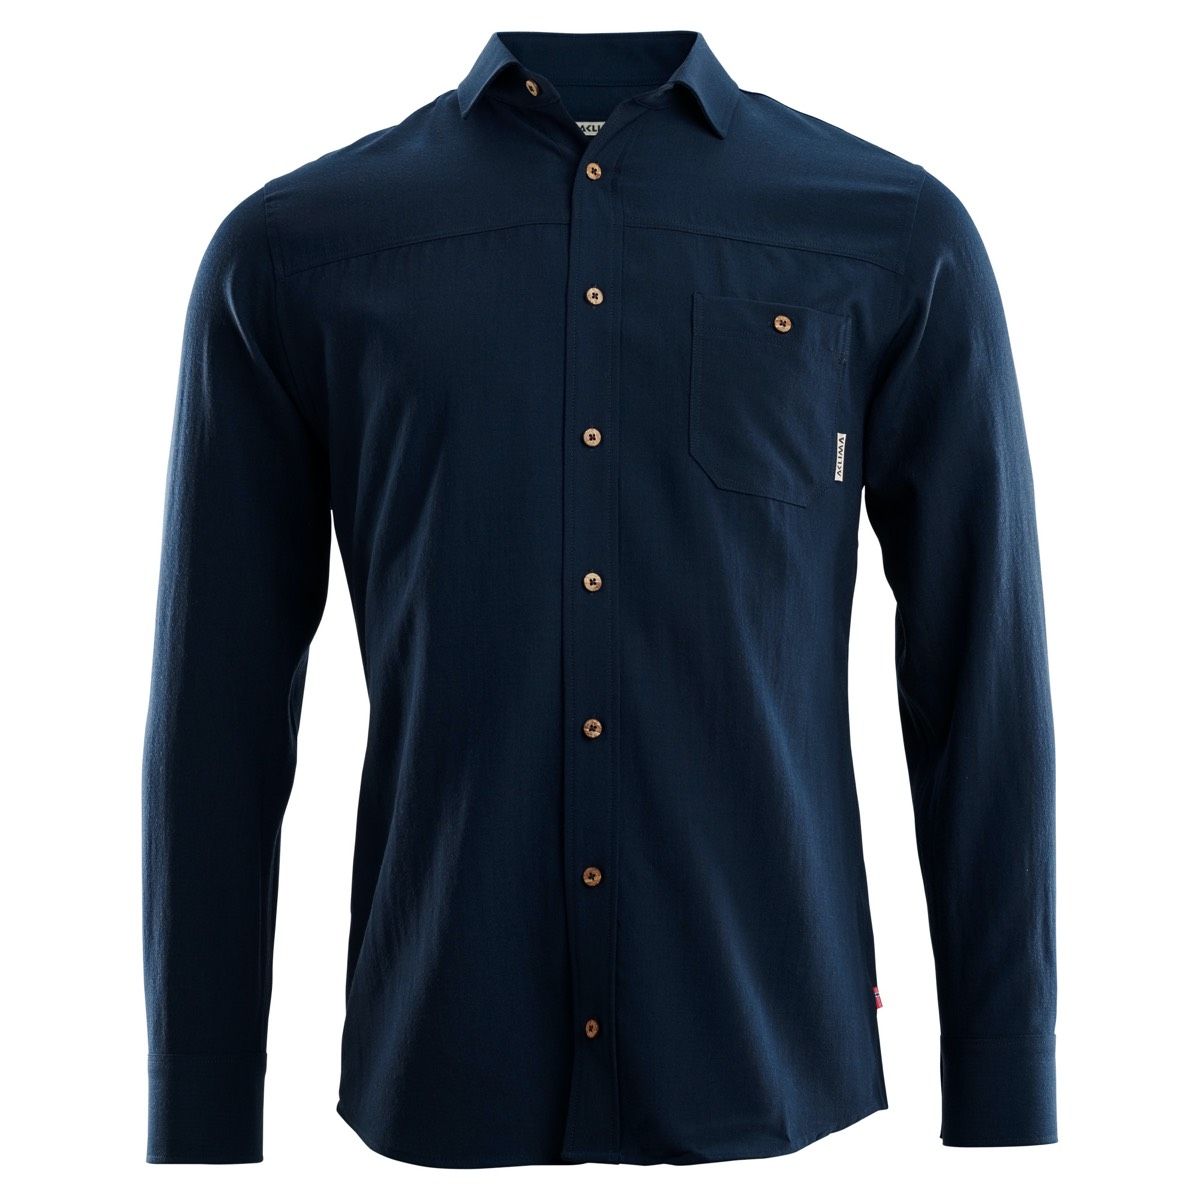 Aclima Woven Wool Shirt, Man Navy Blazer